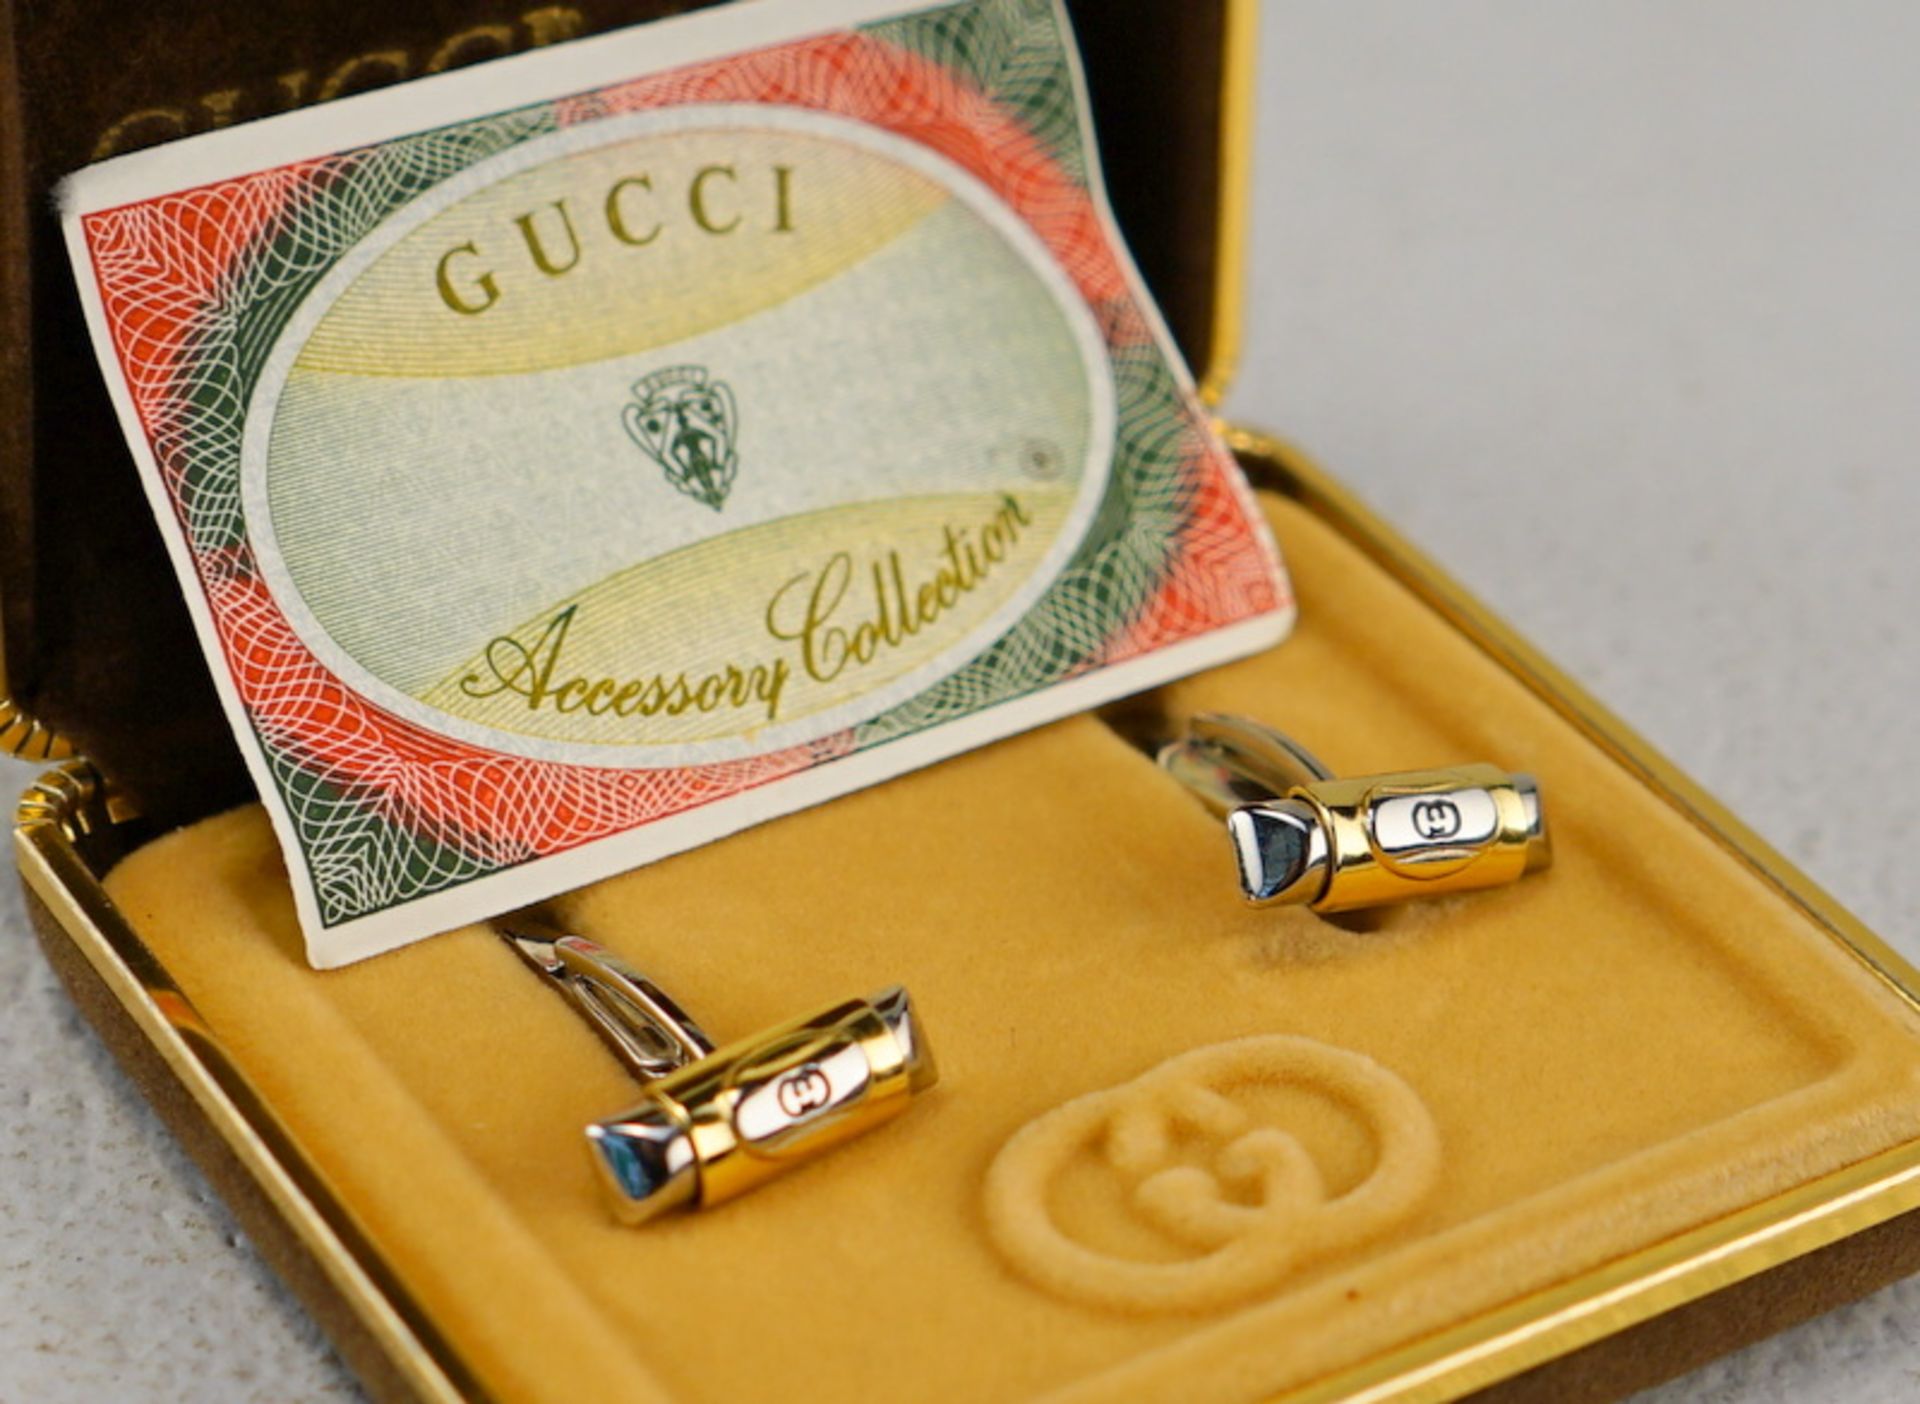 Gucci, Accessory Collection,Florenz: Paar Manschettenknöpfe, X Silver Rare L1518, 80er Jahre - Image 2 of 3